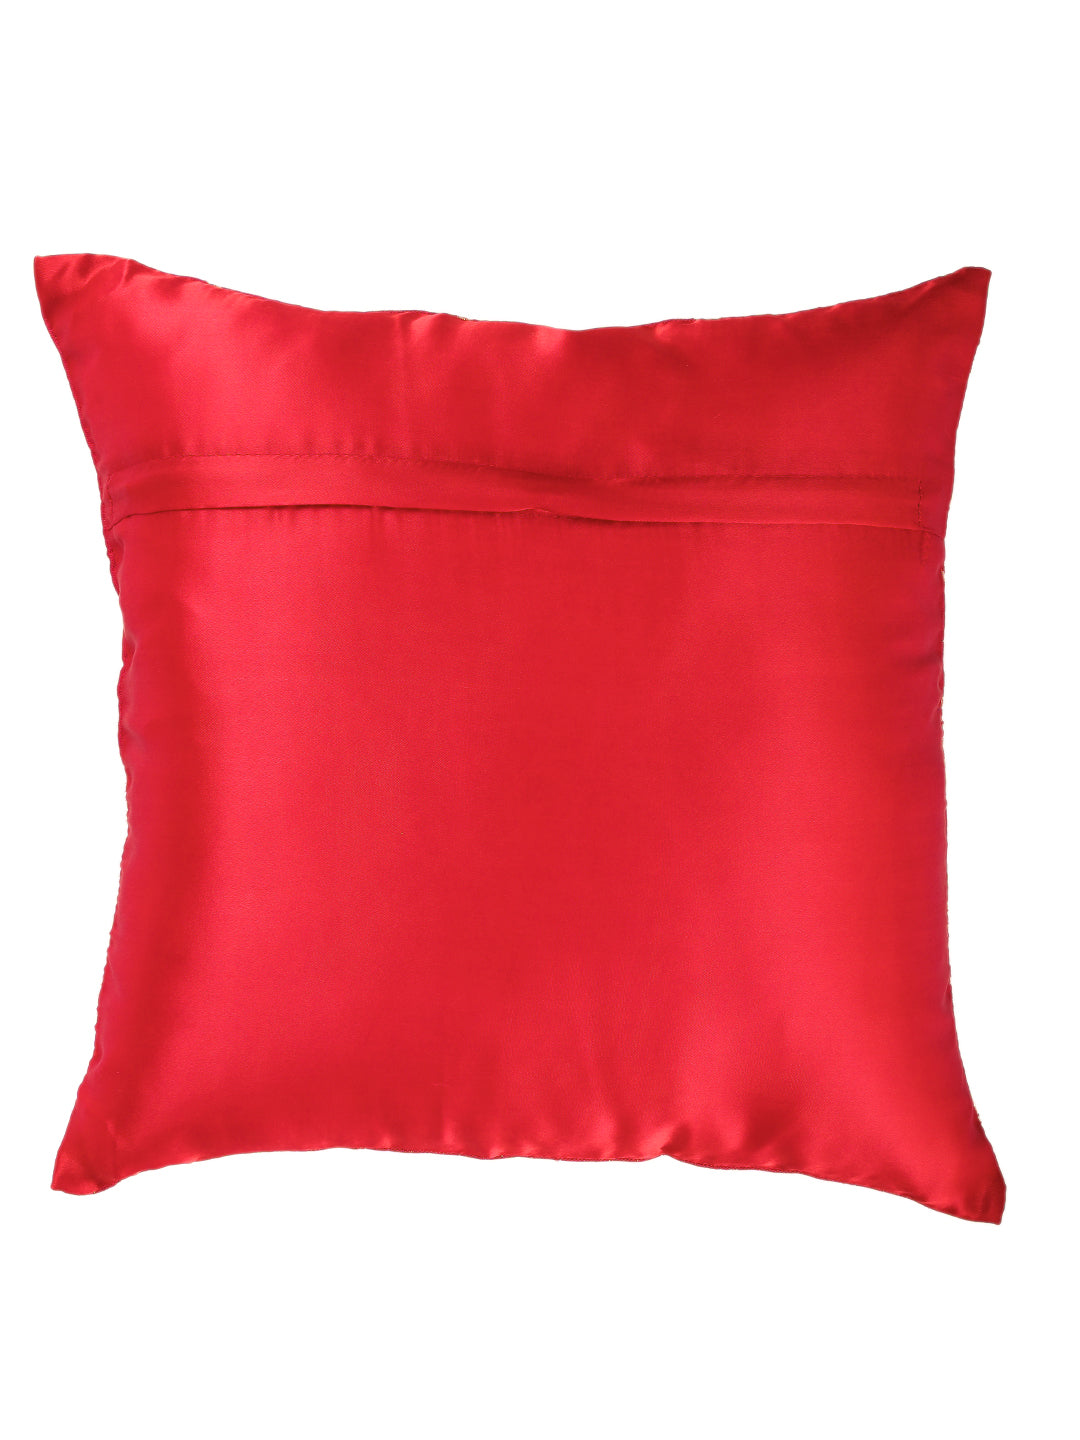 Silkfab Set 0f 5 Decorative Silk Cushion Covers (16x16) Circle Red - SILKFAB